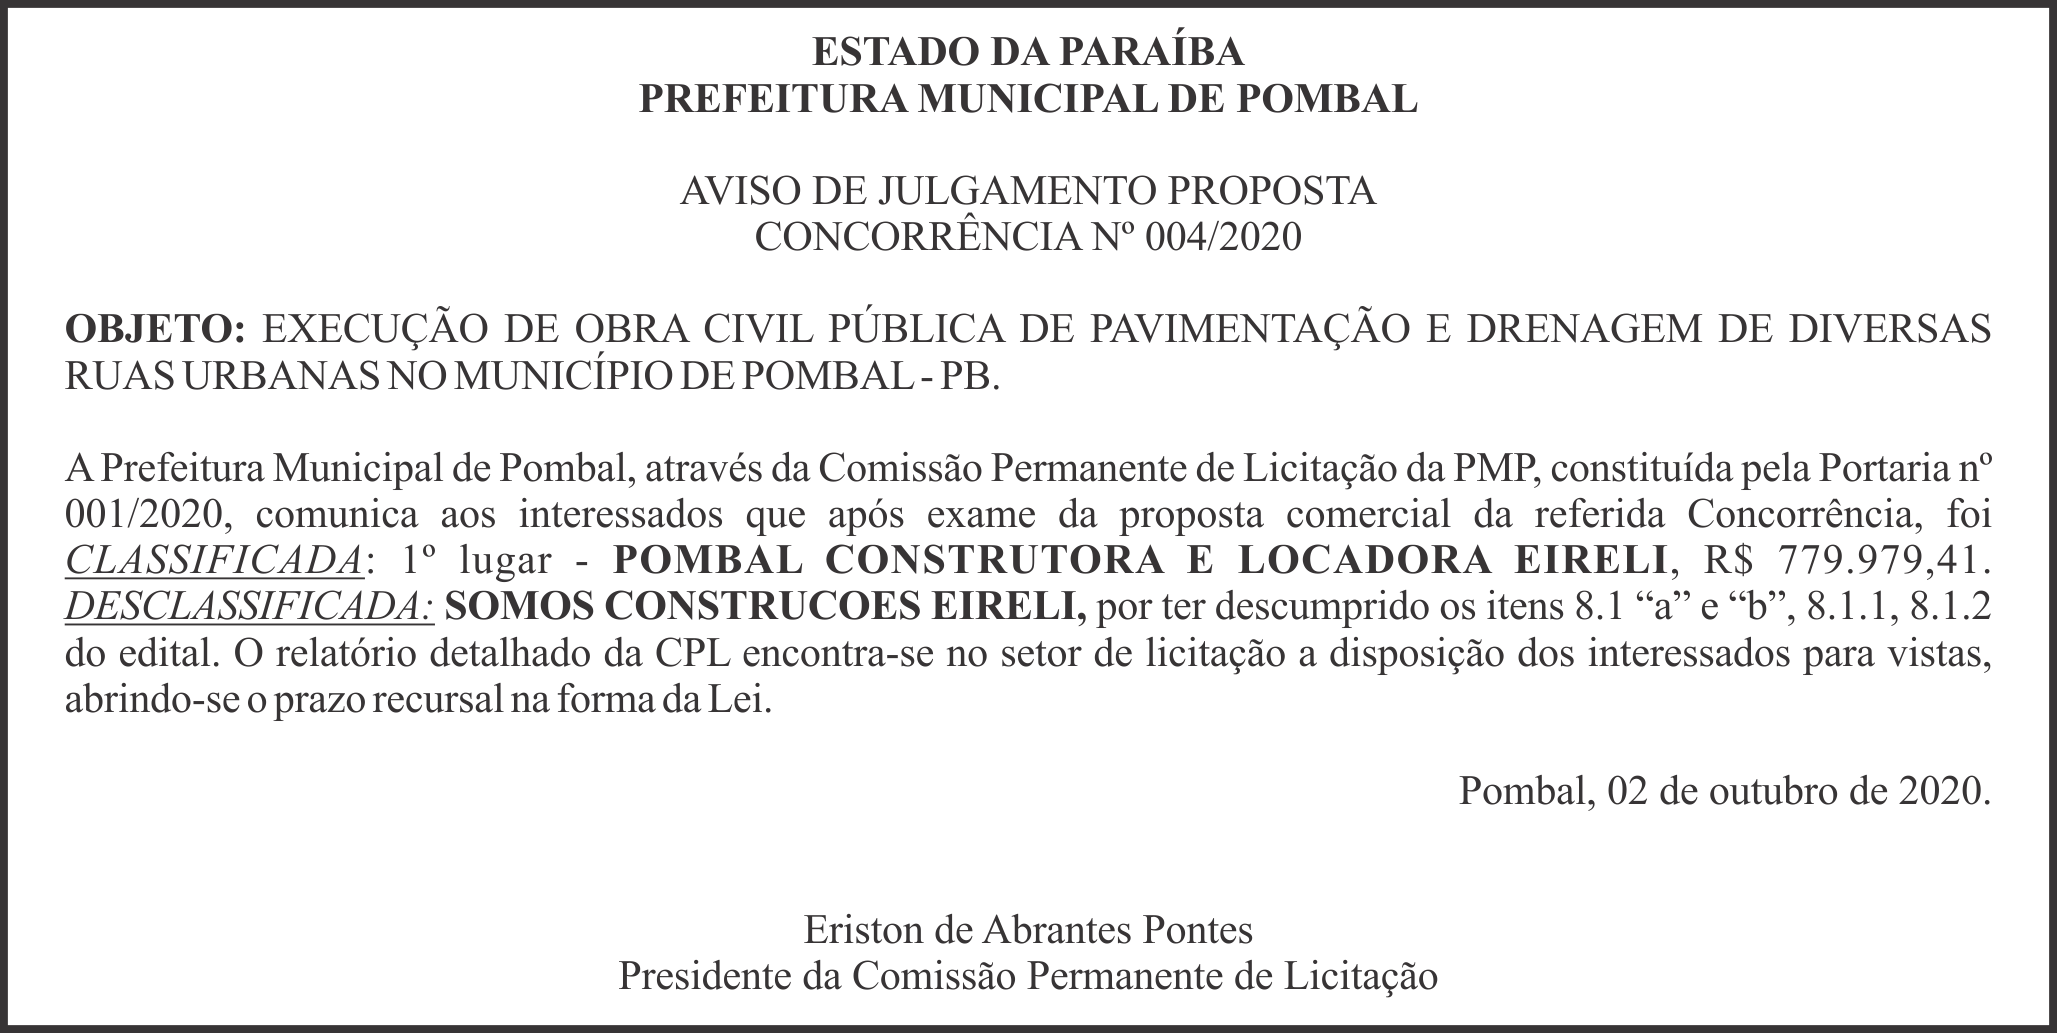 PREFEITURA MUNICIPAL DE POMBAL – AVISO DE JULGAMENTO PROPOSTA – CONCORRÊNCIA Nº 004/2020